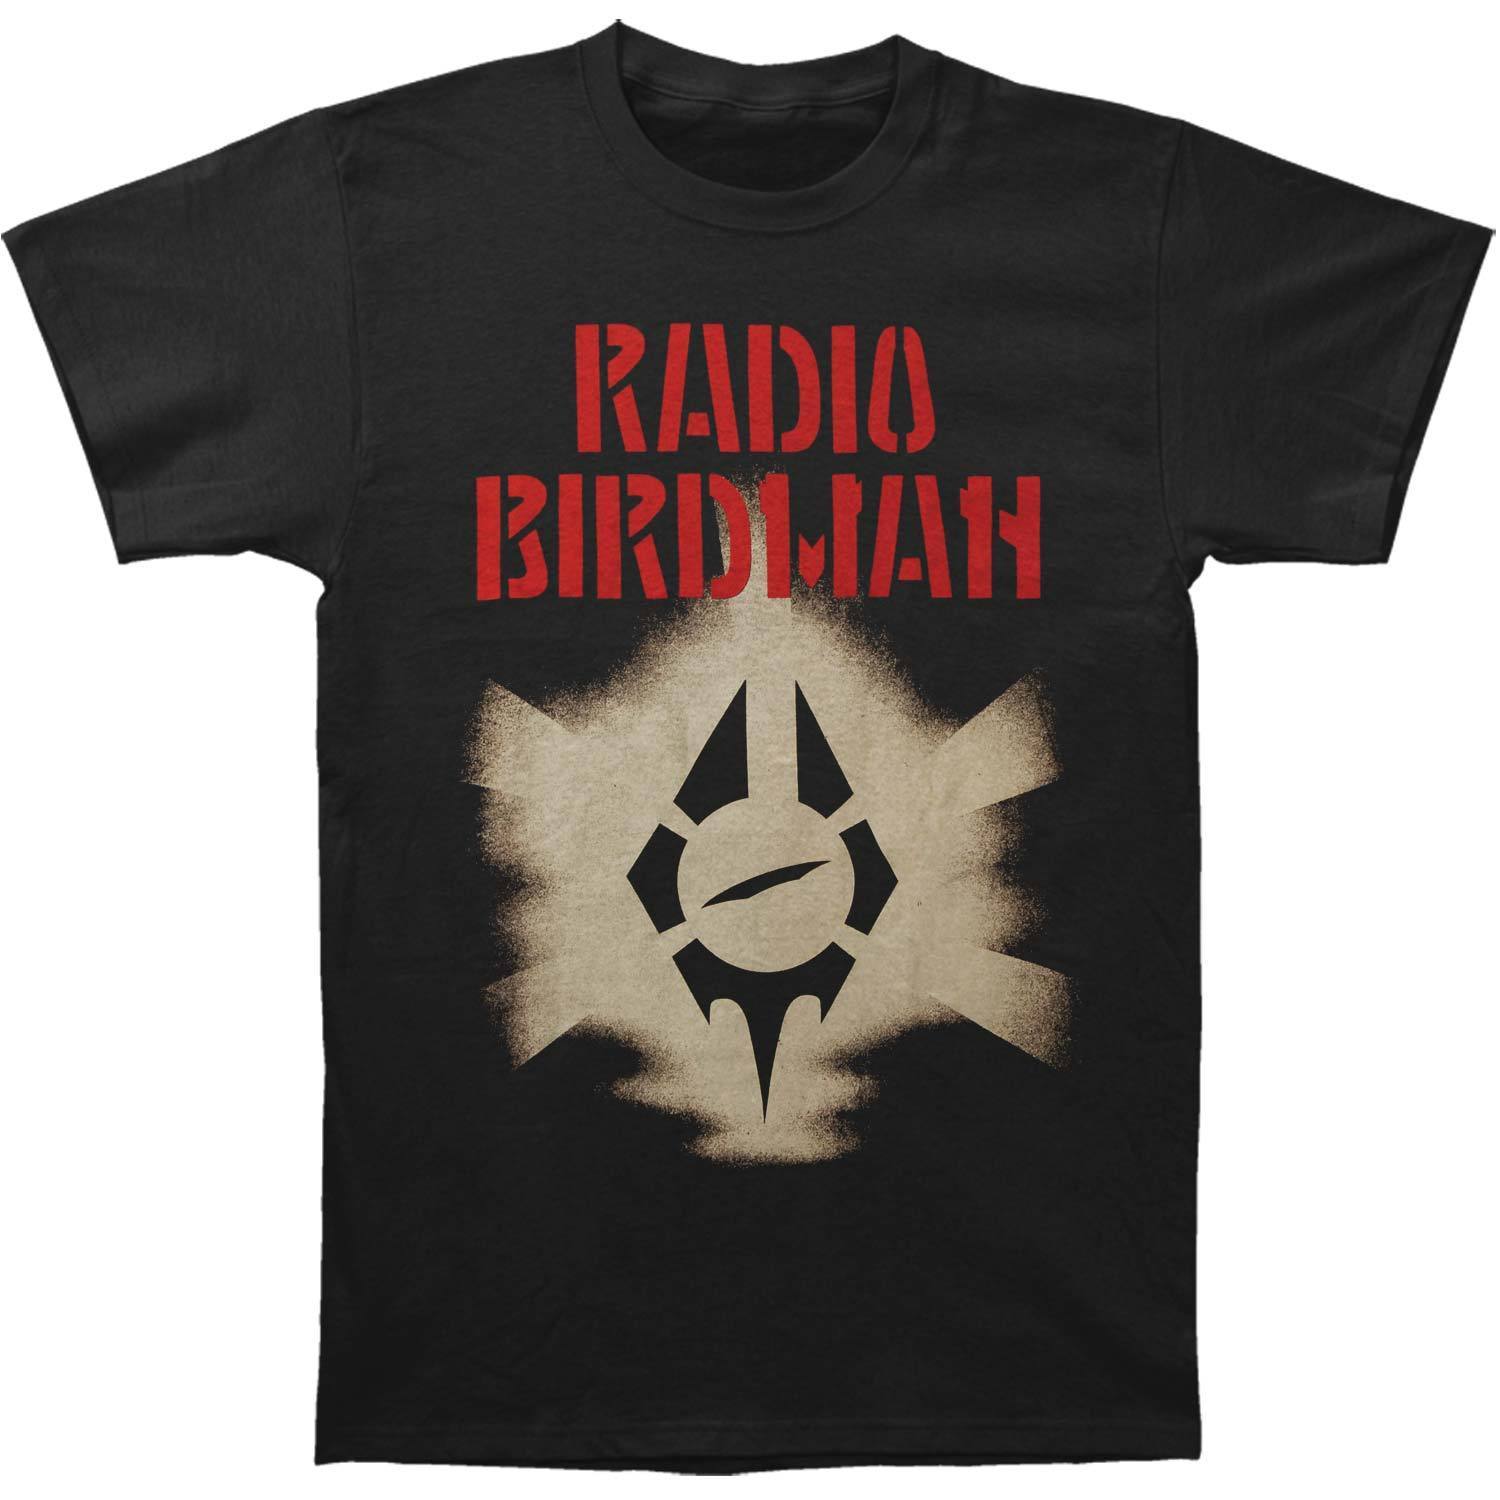 Birdman Logo - US $13.04 13% OFF|Radio Birdman Men's Tour Logo T shirt XX Large Black  Different Colours High Quality 100% Quality Print New Summer Cotton T  Shirt-in ...